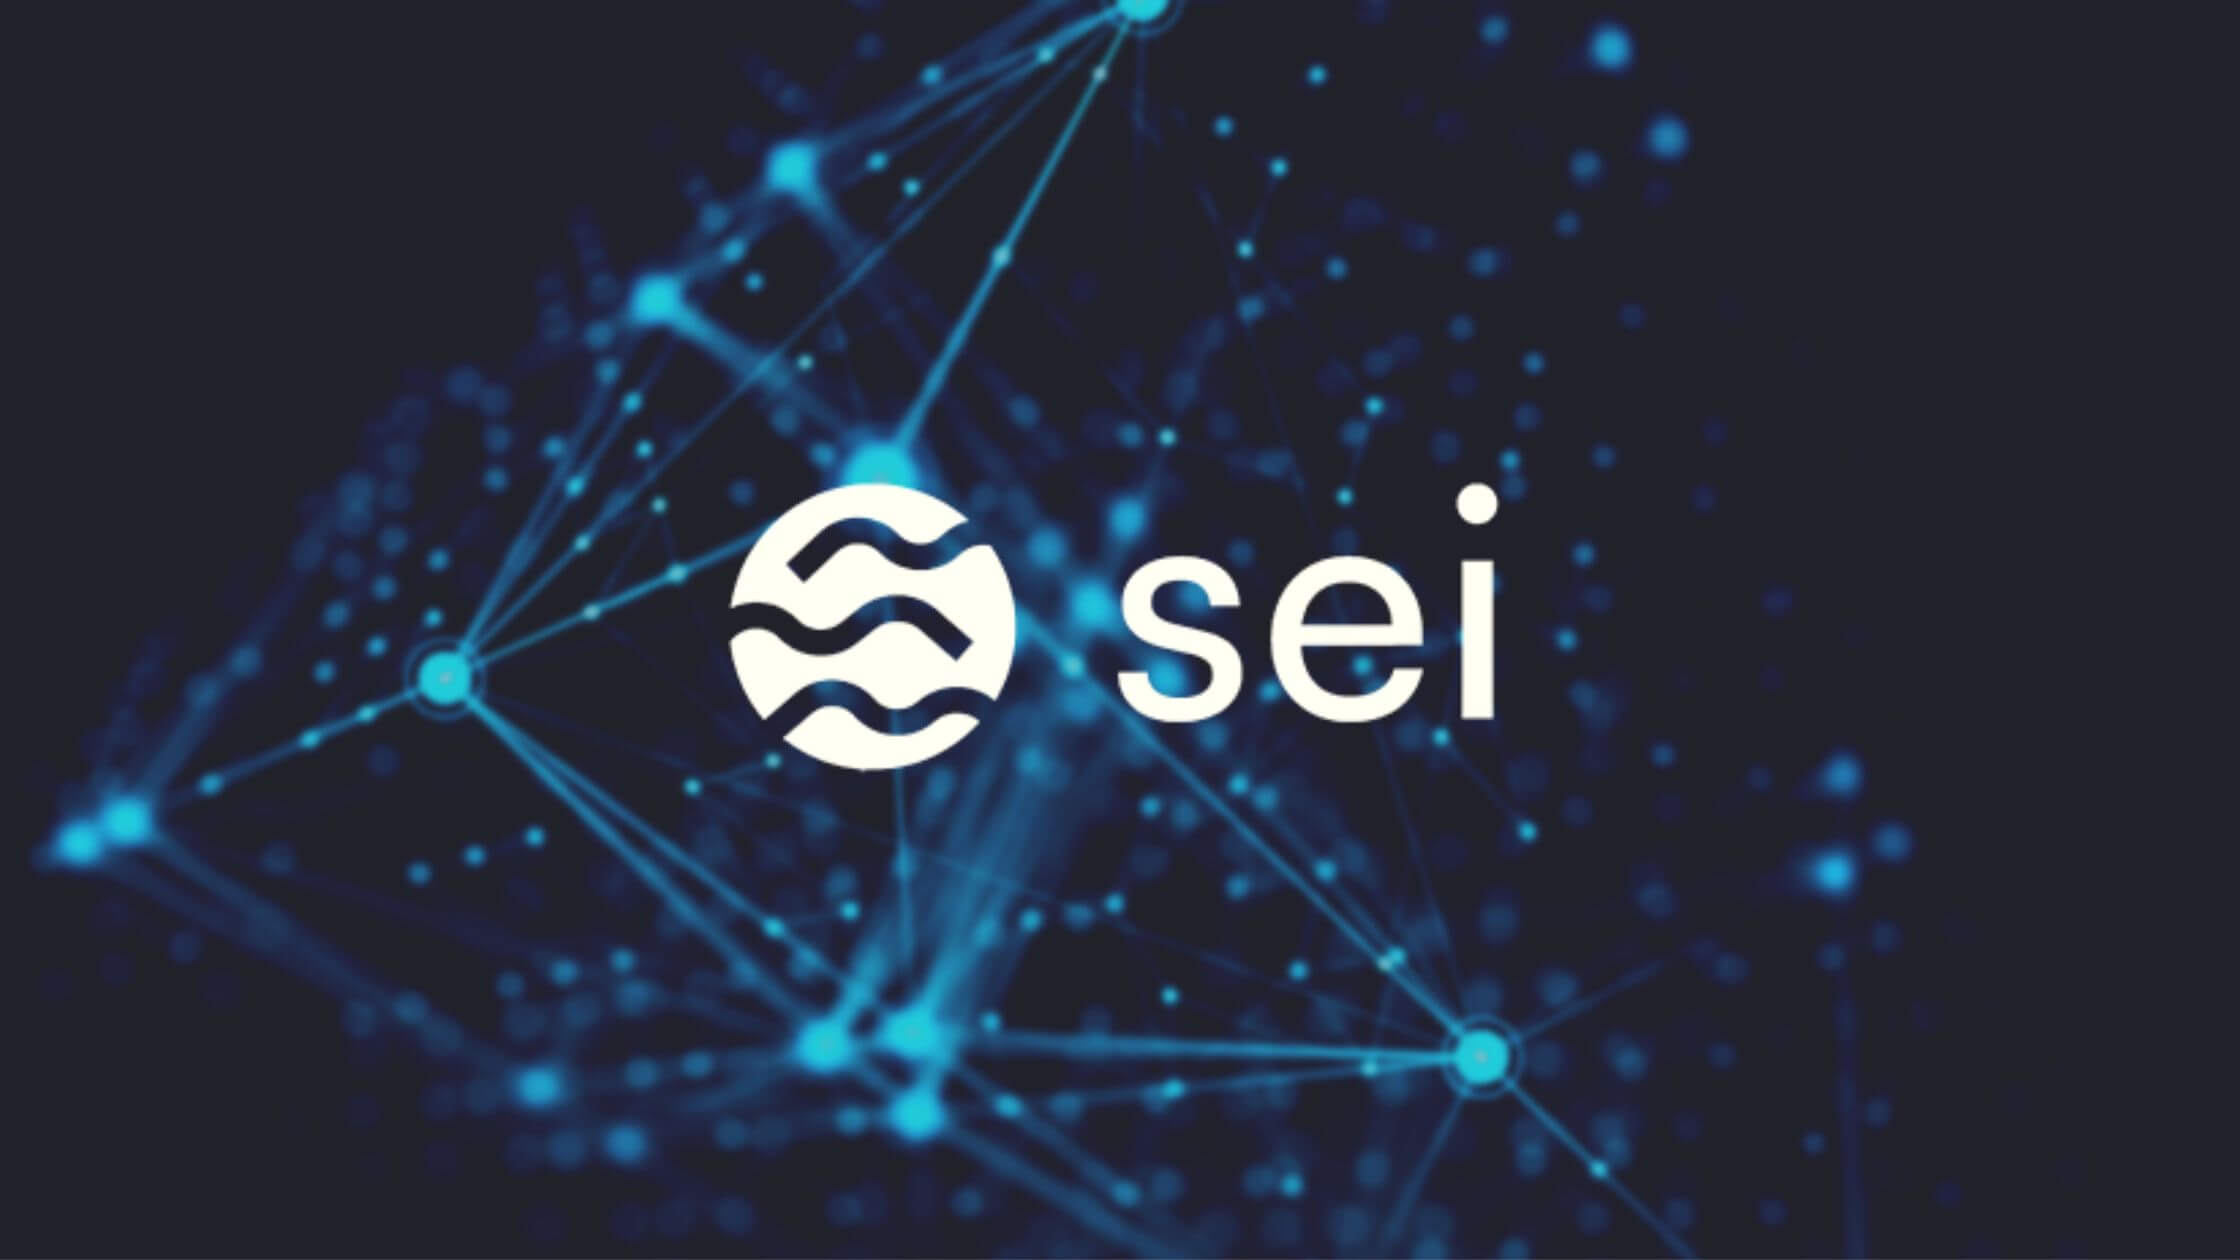 Characteristics Of Sei Network